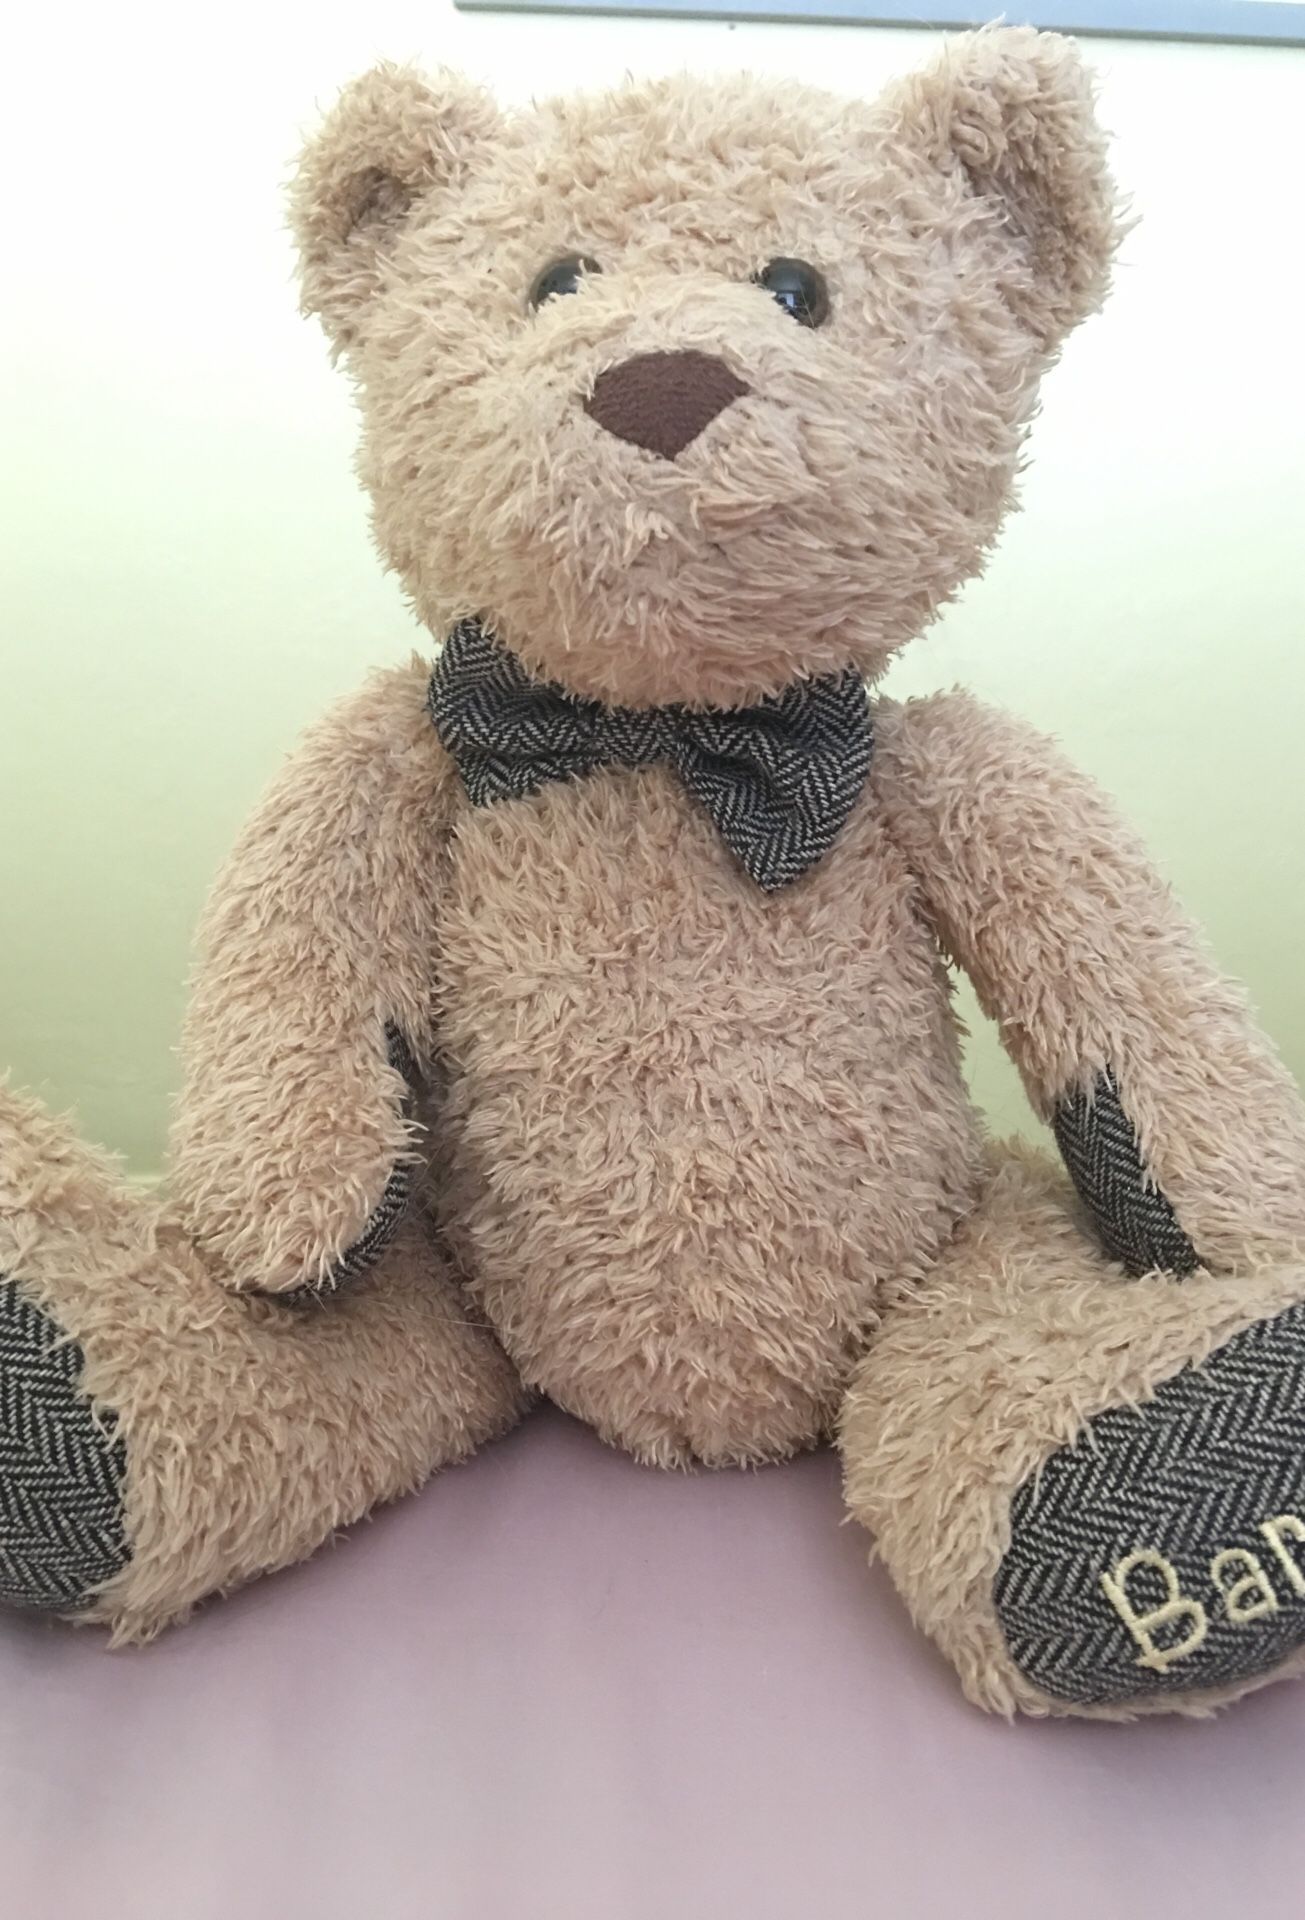 Barnsie stuffed teddy bear with bow tie